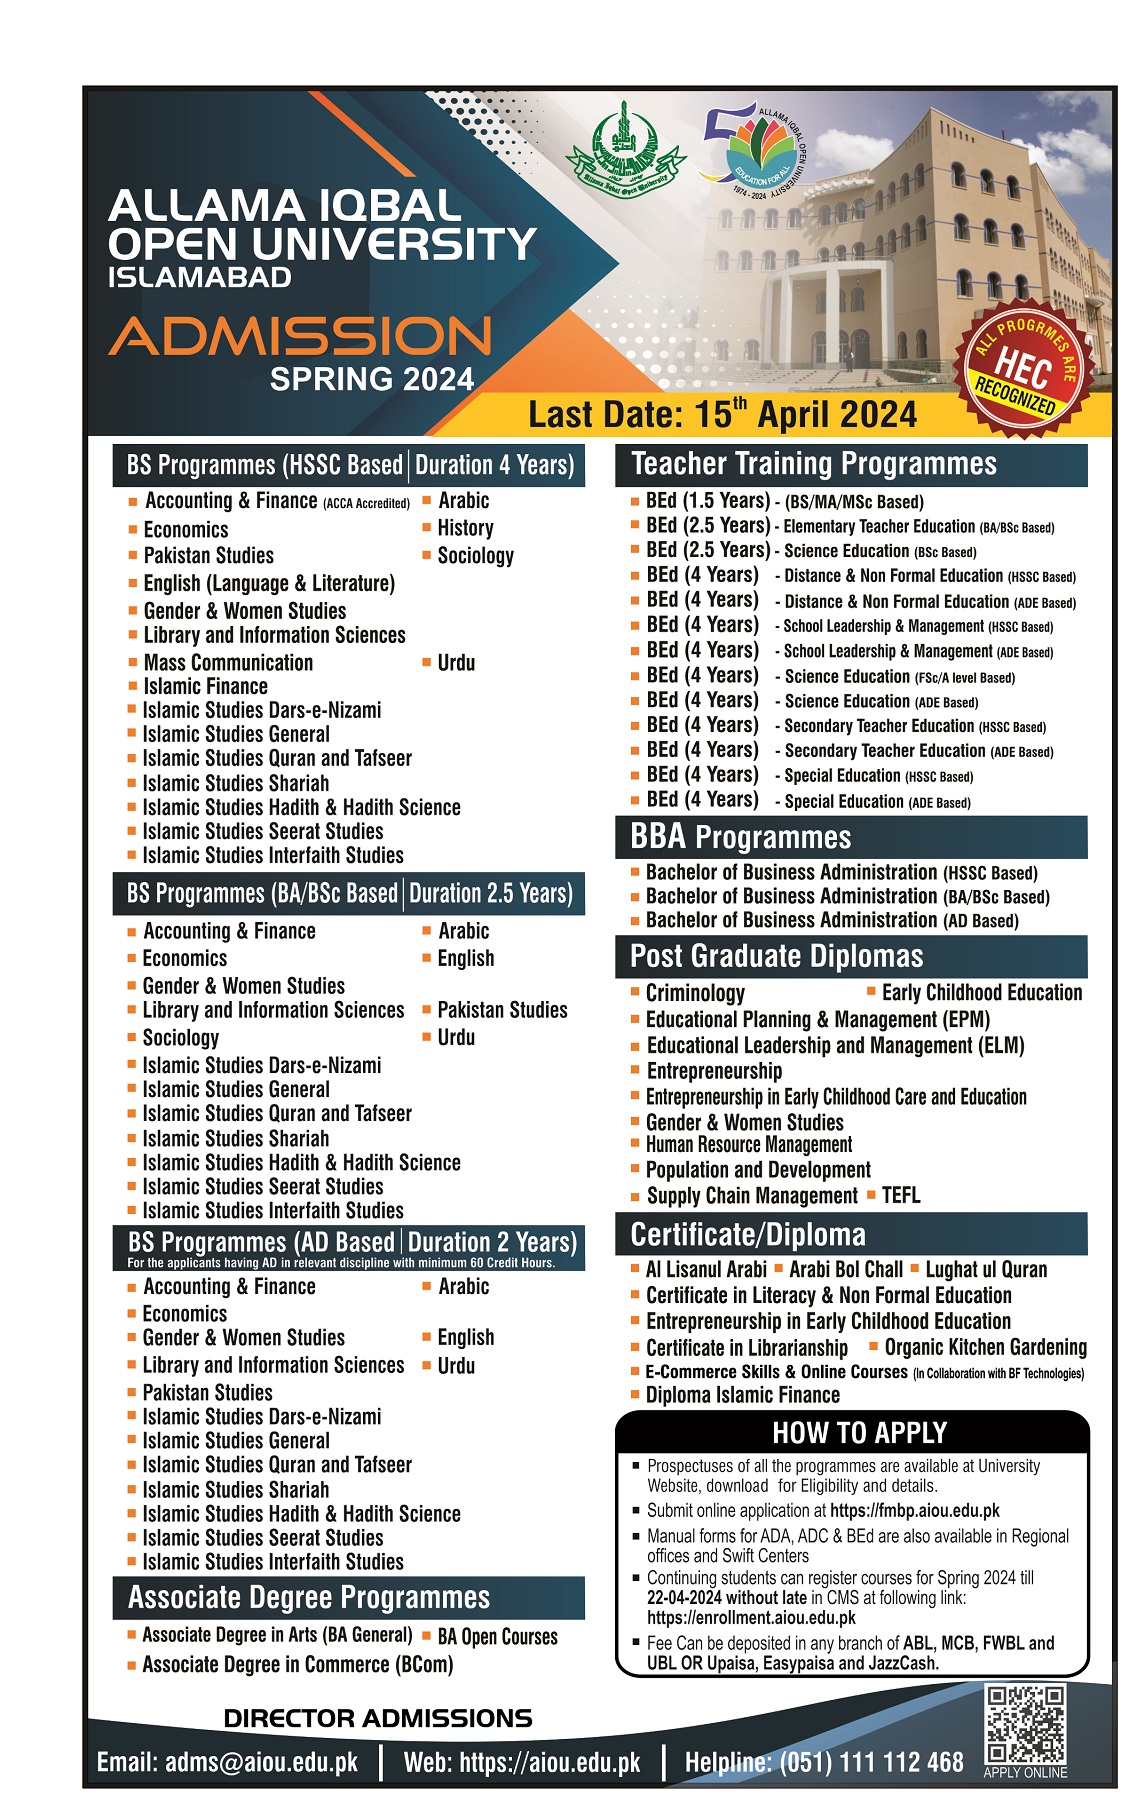 AIOU Islamabad Teachers Training Programs and BS Programs Spring 2024